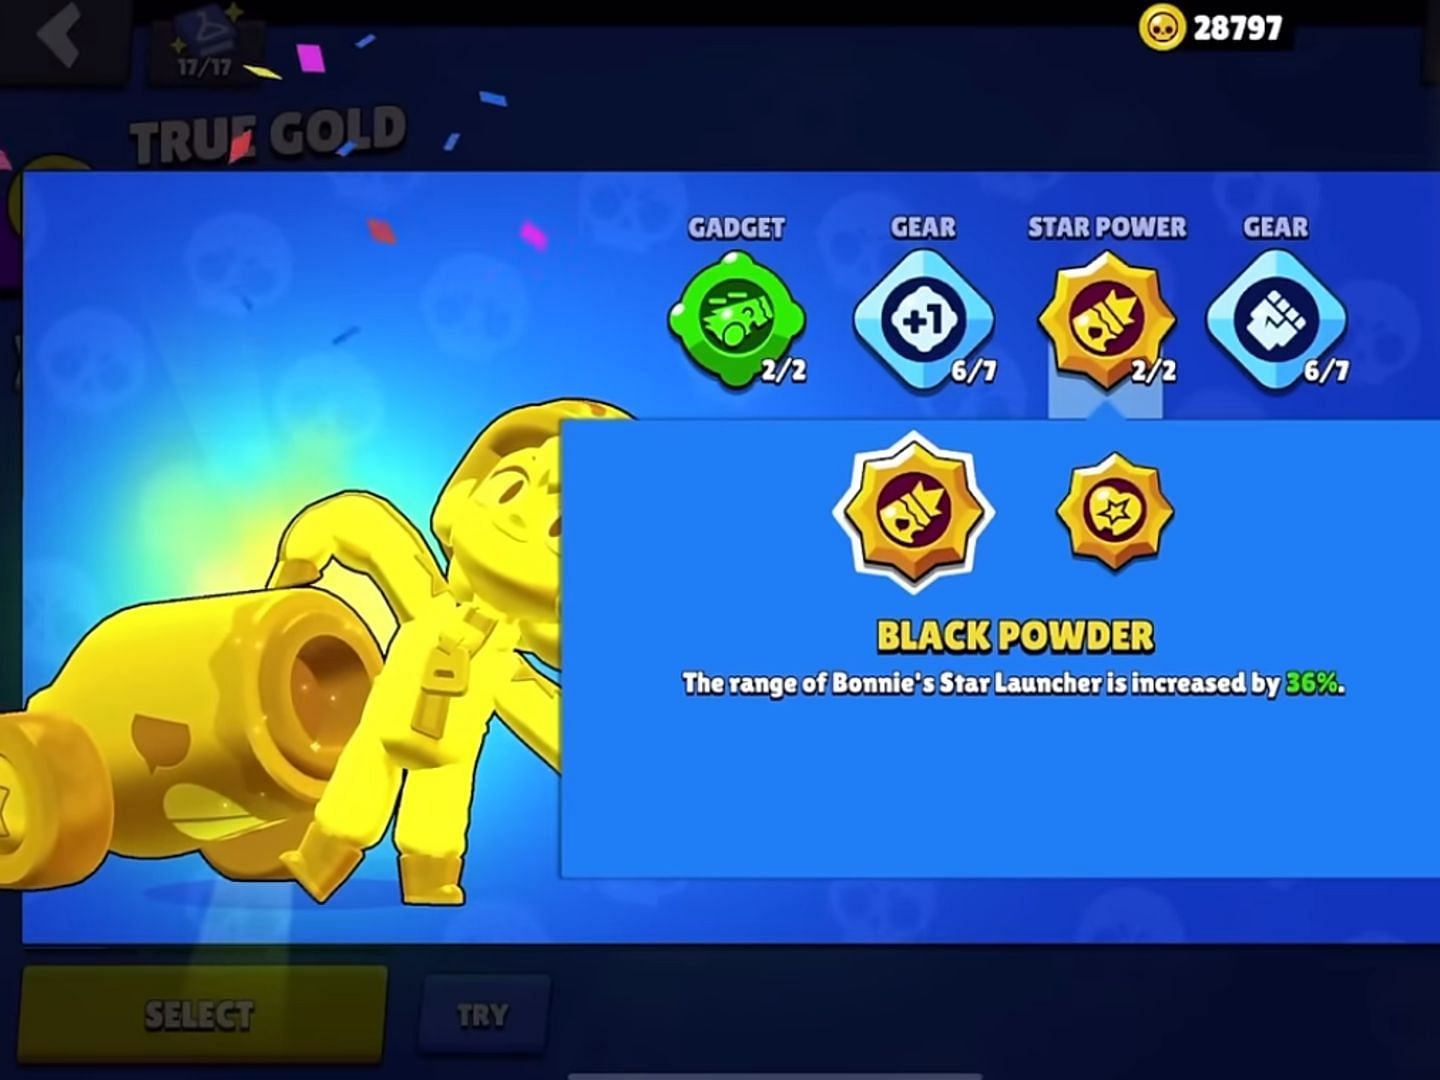 Black Powder Star Power (Image via Supercell)